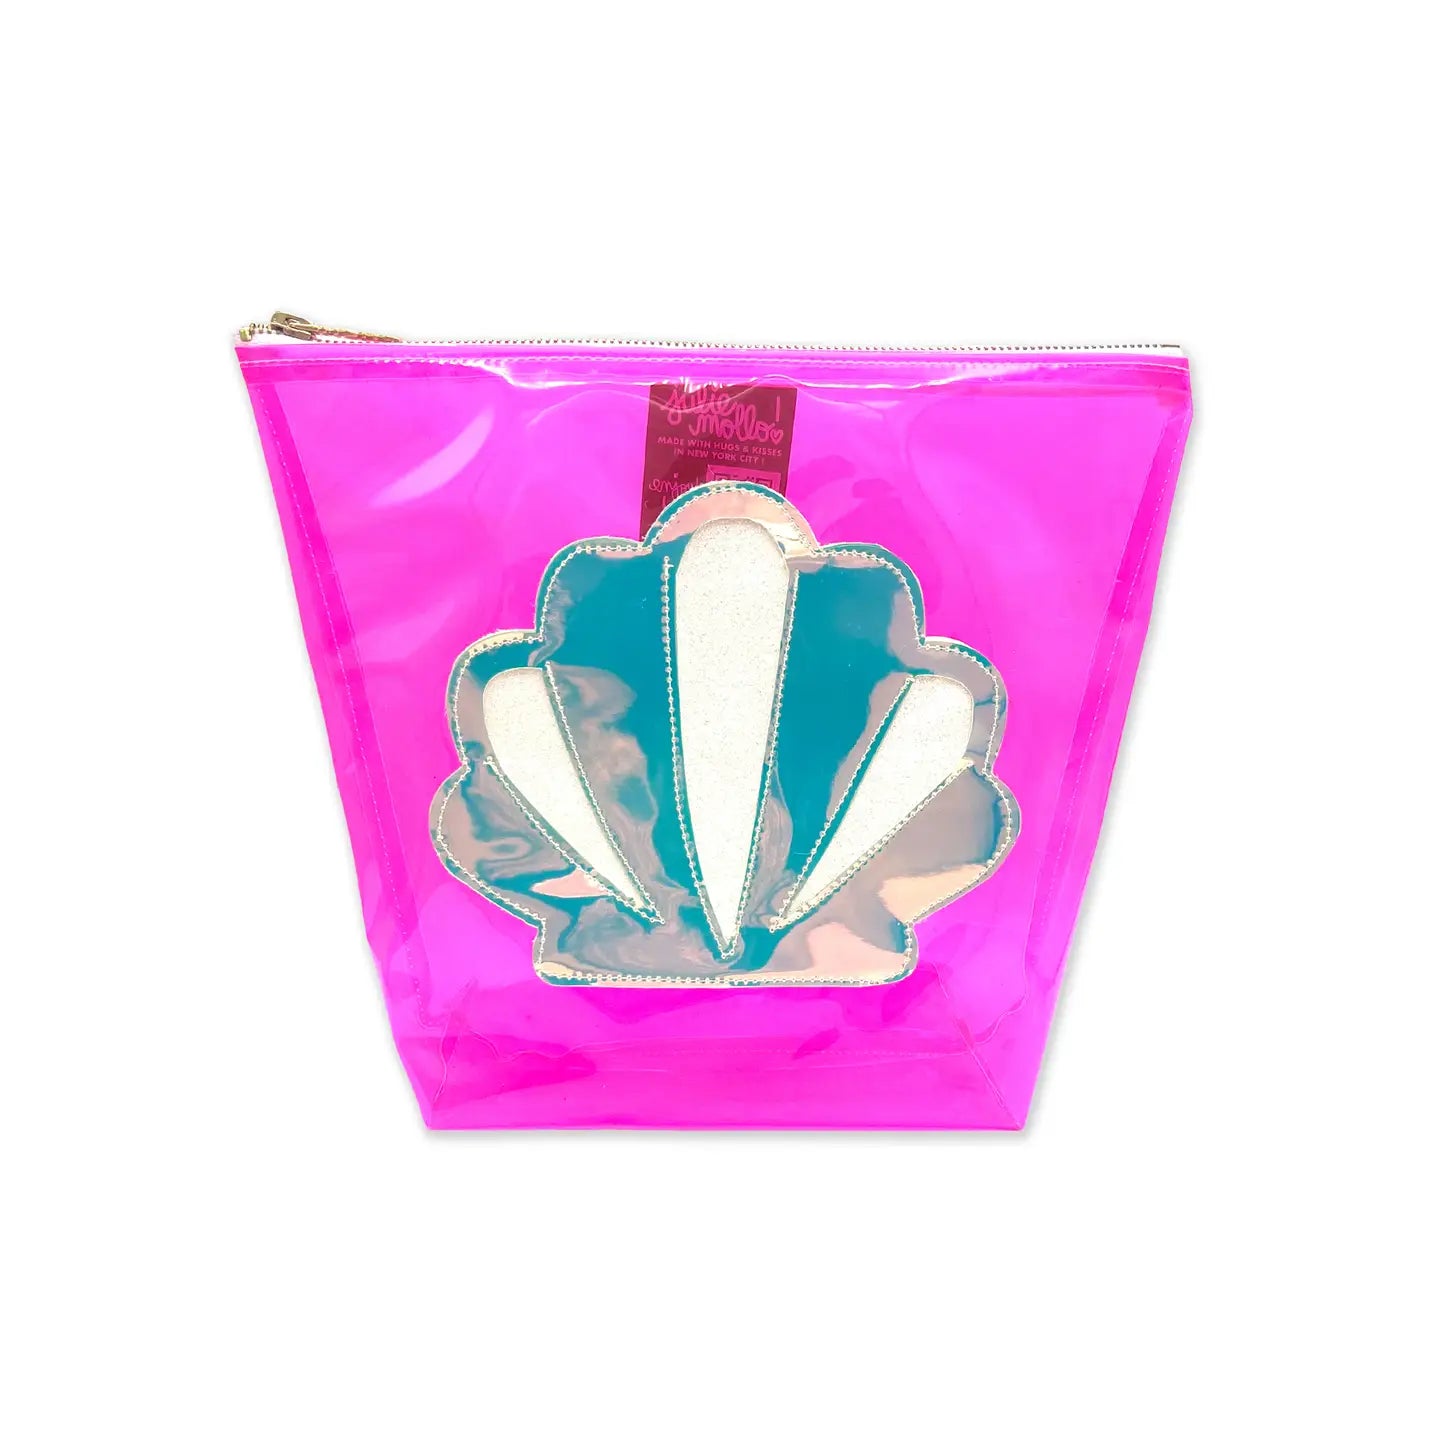 Holographic Spf Seashell Pouch! Big Beach Bag Sunscreen Case